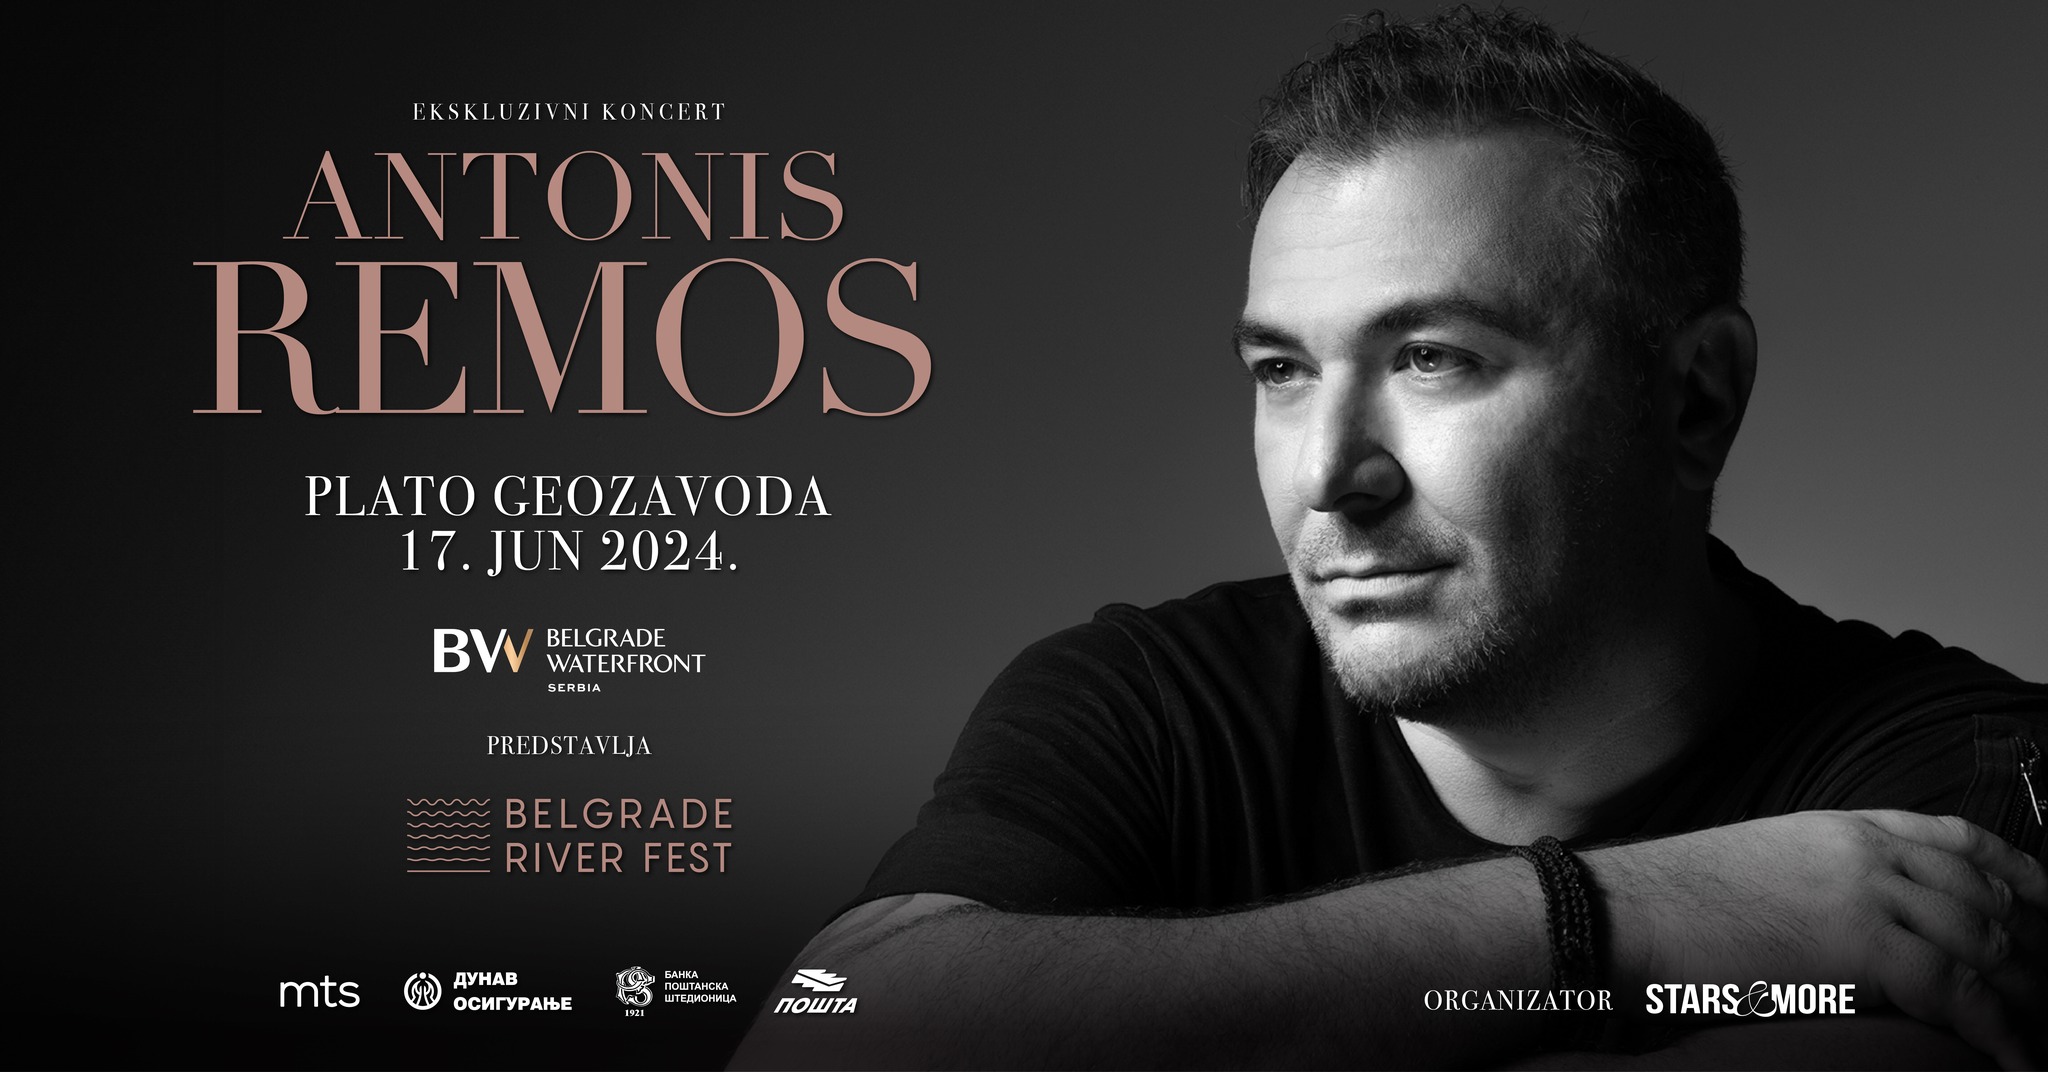 Antonis Remos, BelgradeRiverFes 17.06.2024. Plato Geozavod